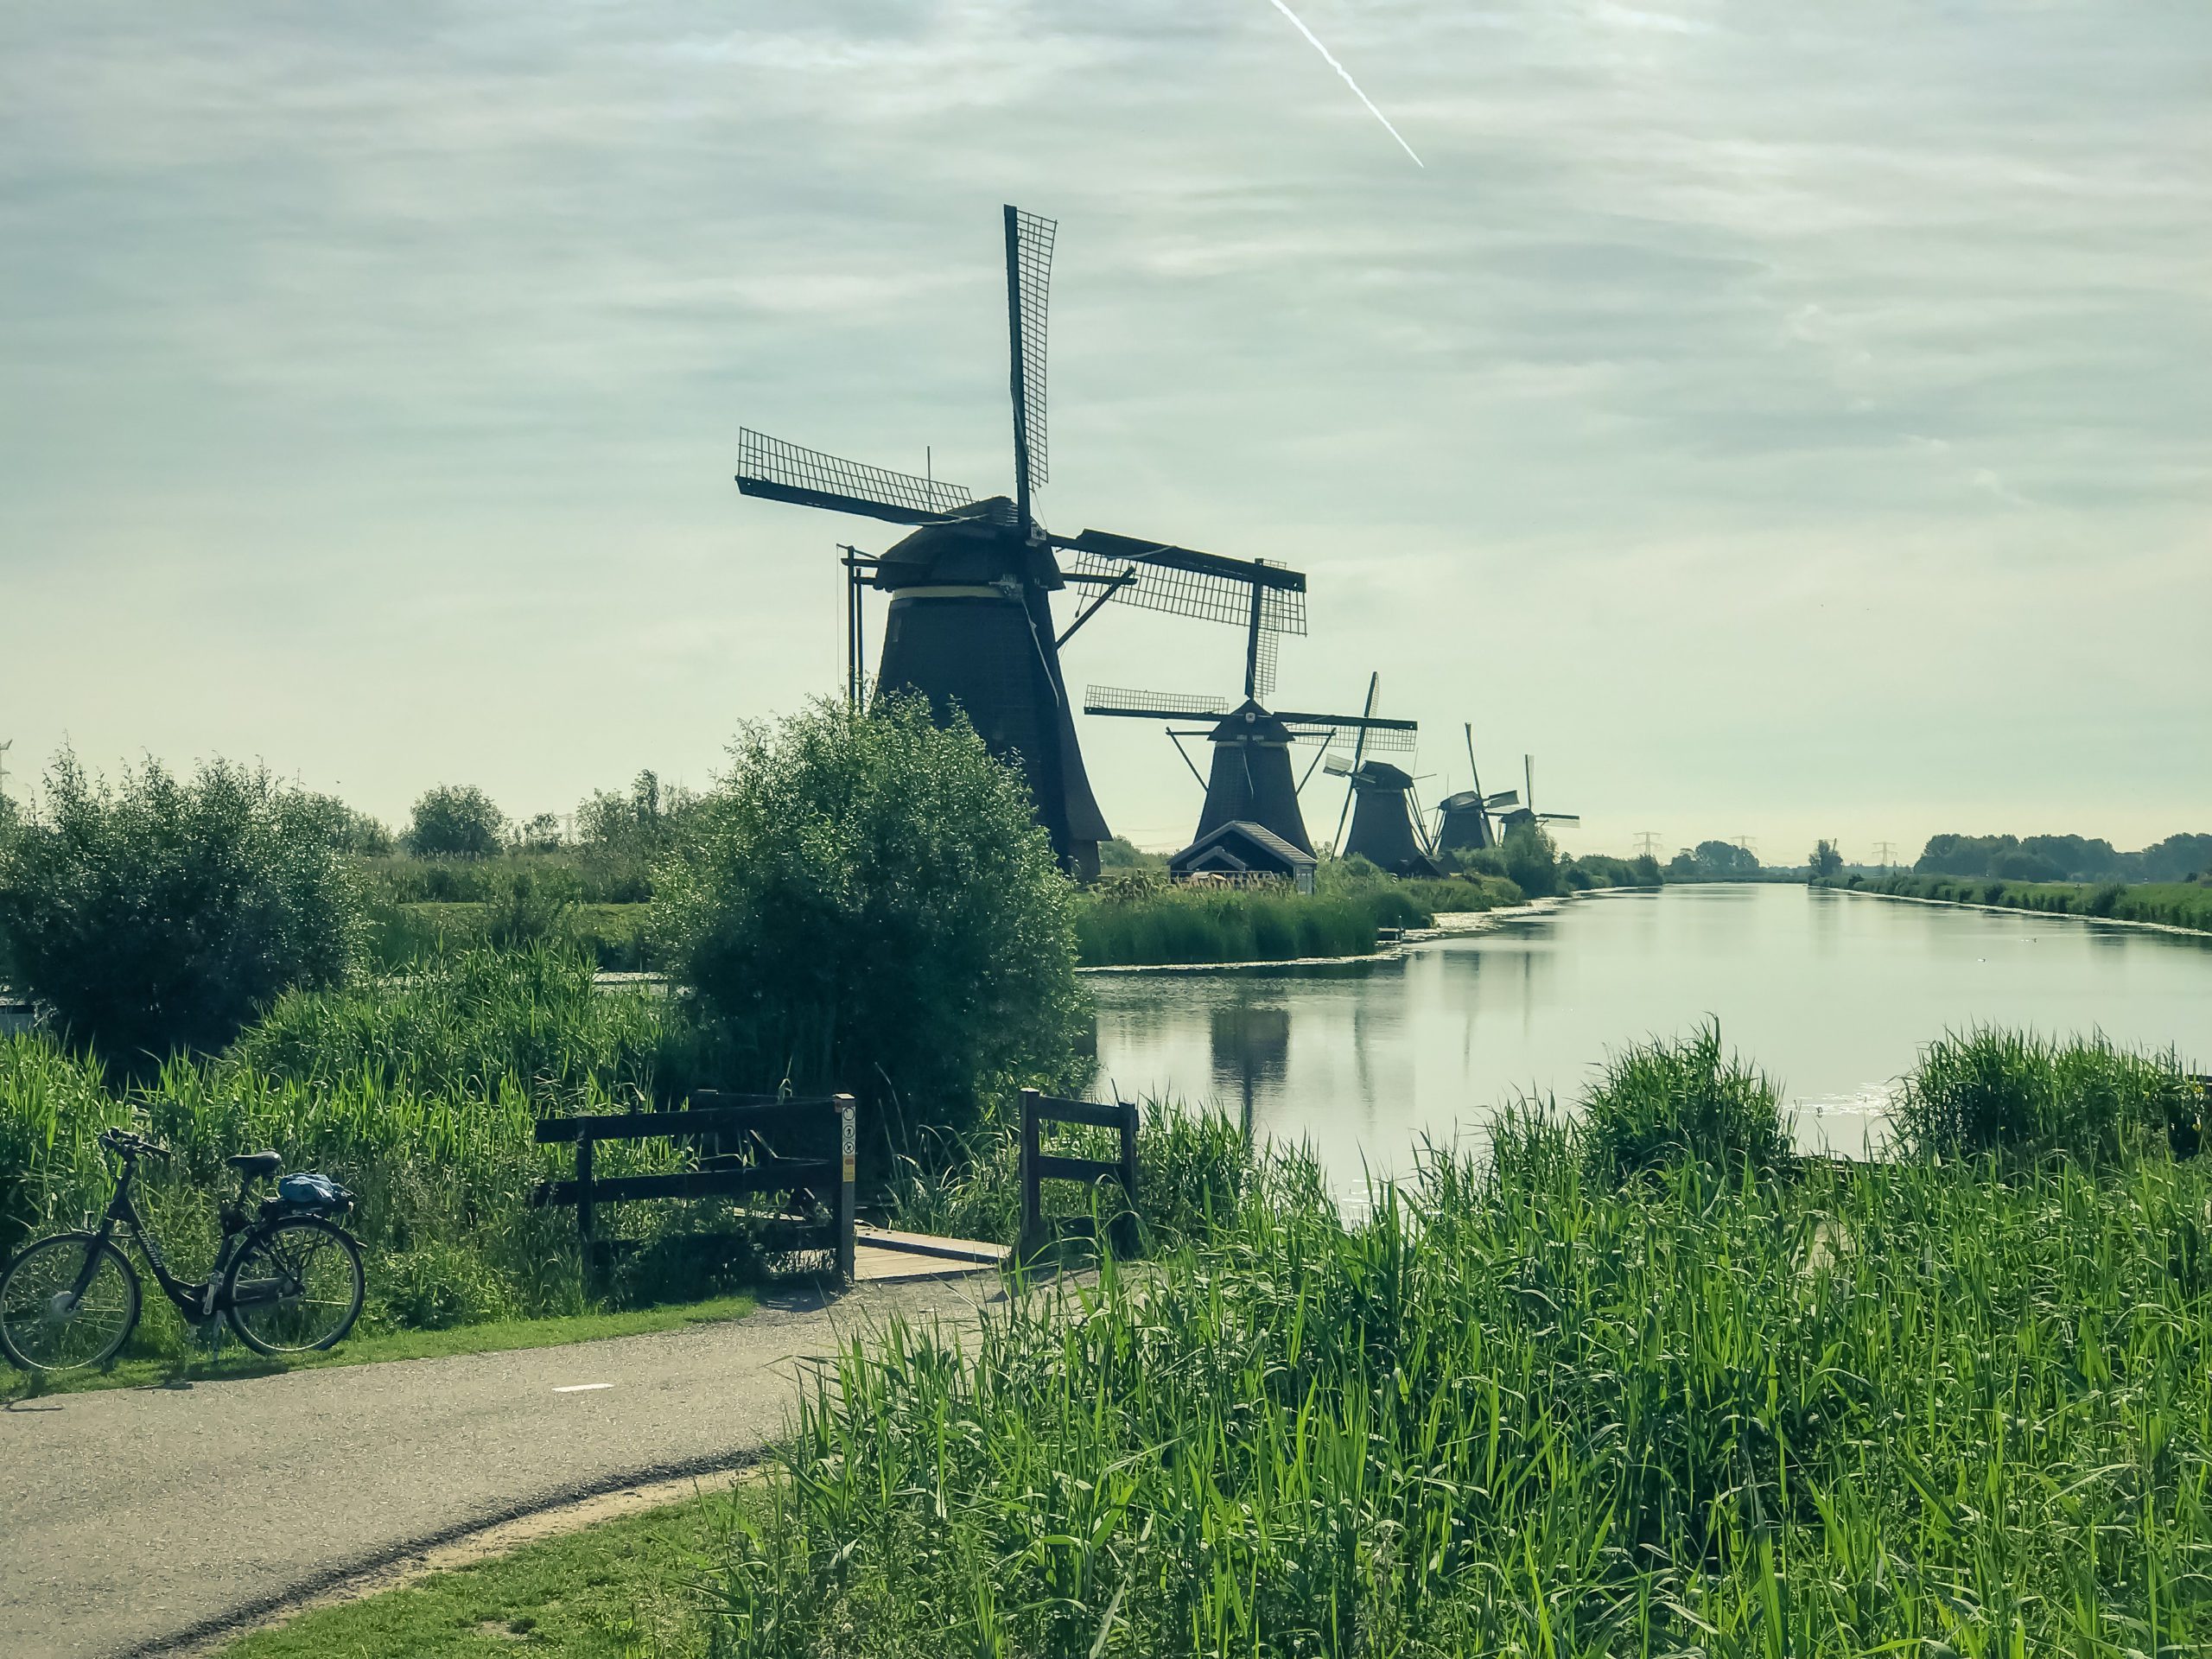 The Famous Netherlands wooden Windmills, UNESCO World Heritage Site, Kinderdijk Windmill village